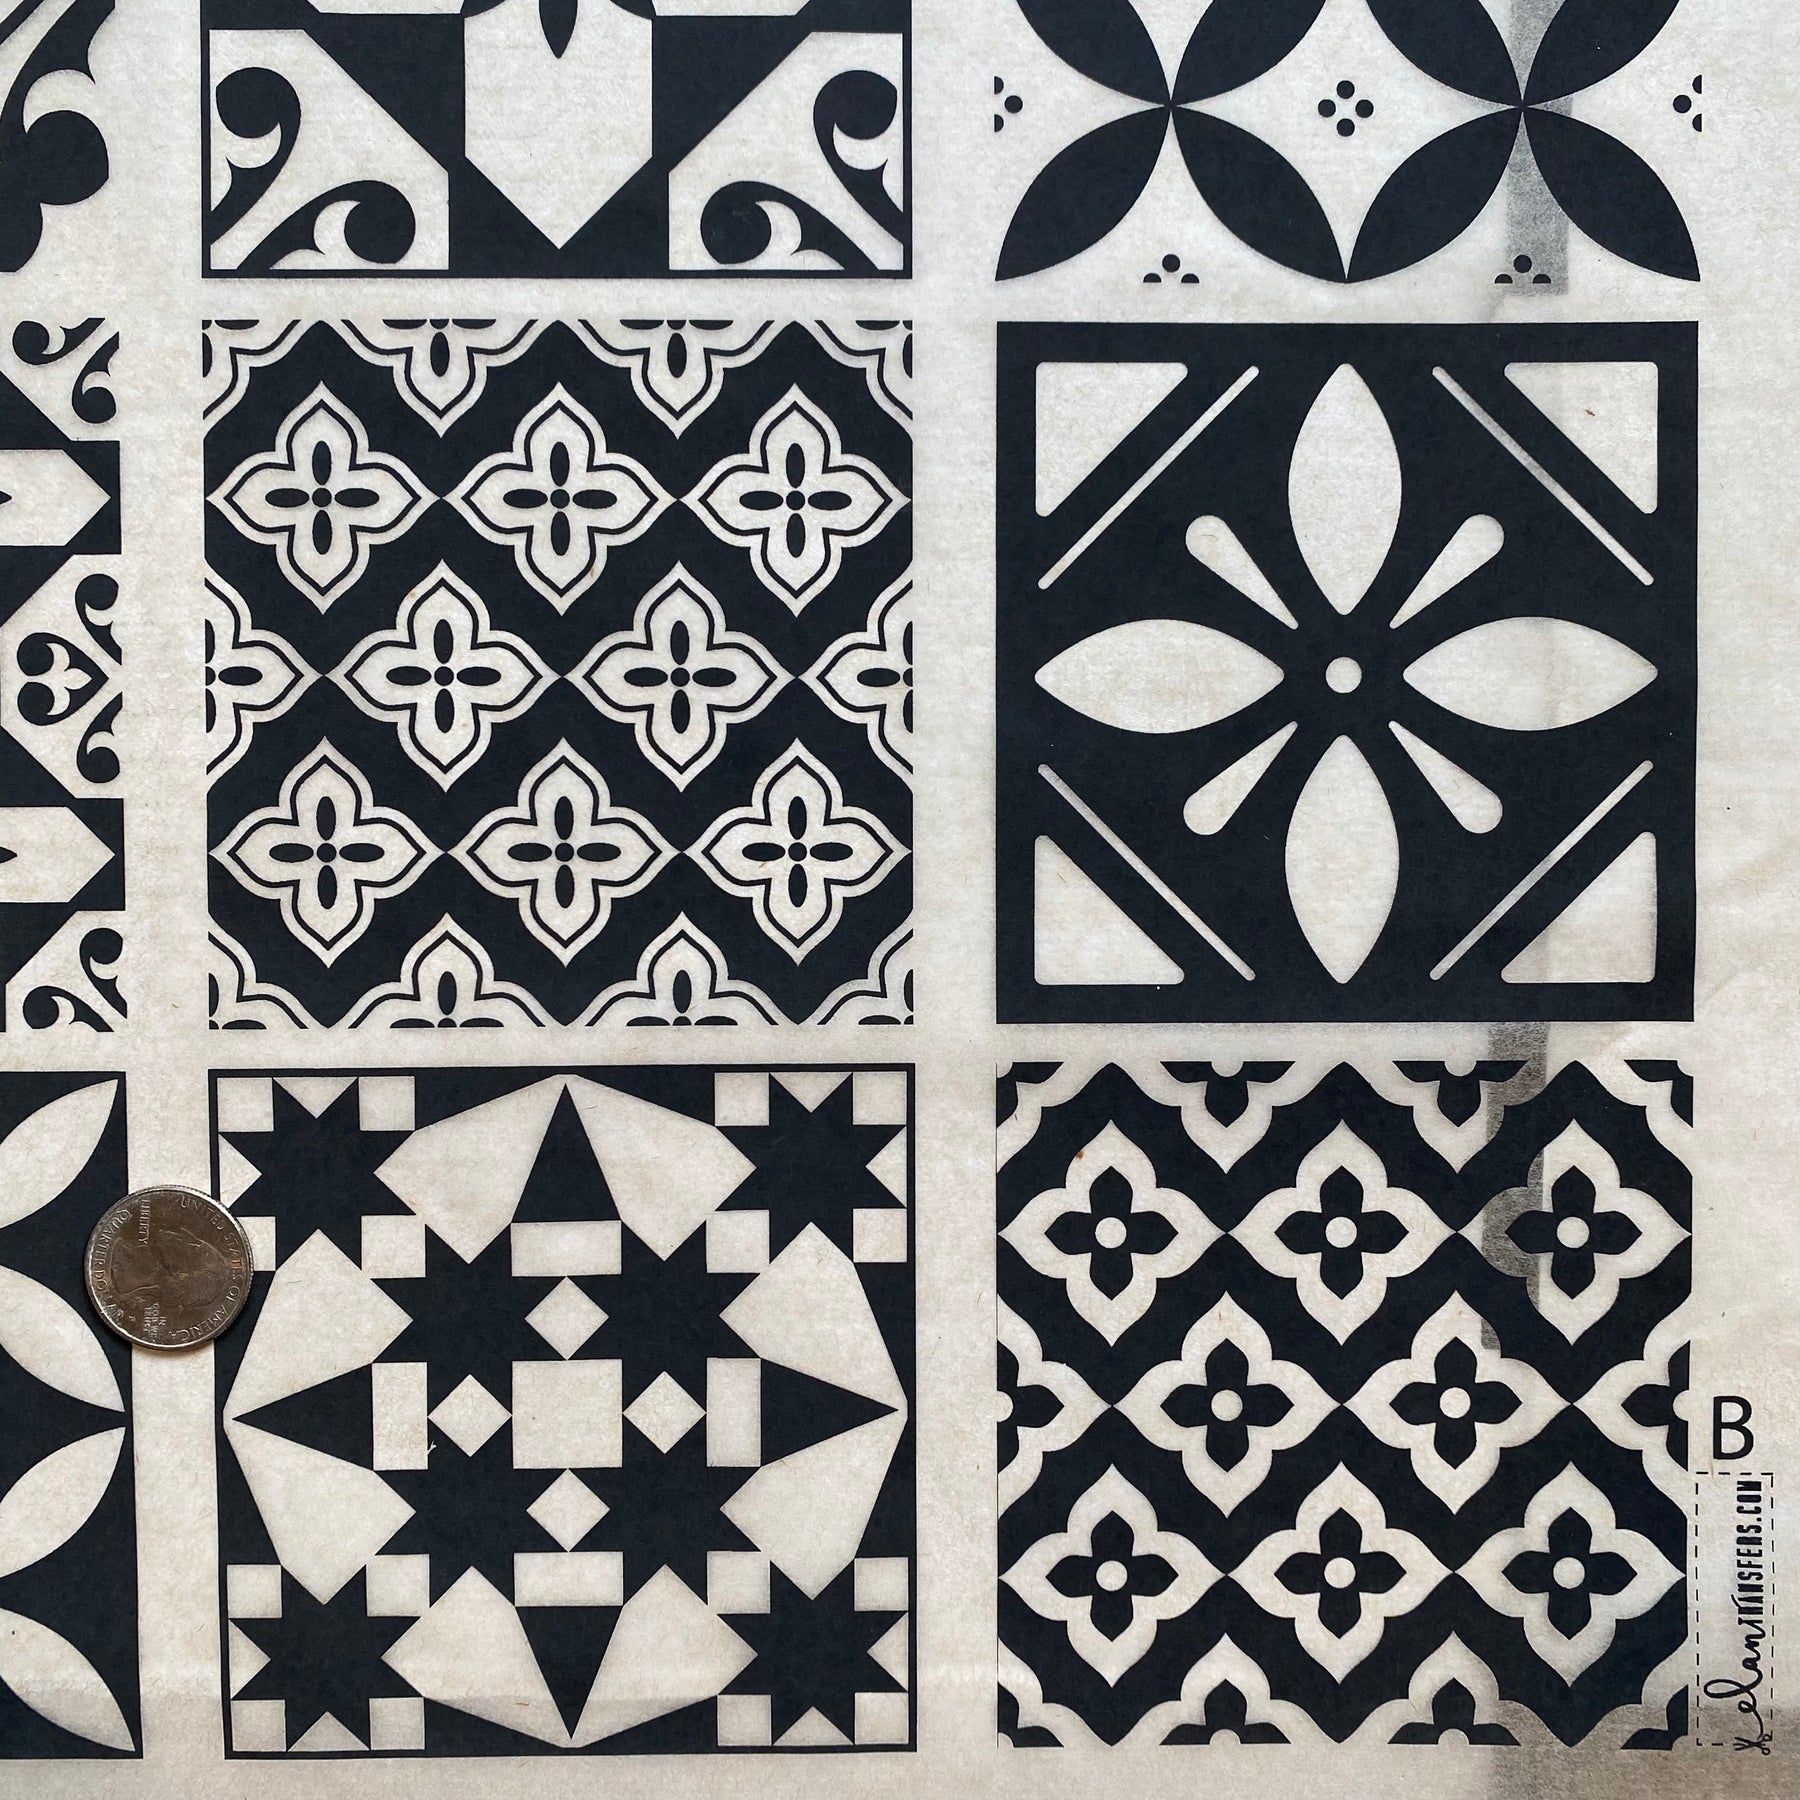 Moroccan Tiles B - Underglaze Transfer Sheet - You Choose Color